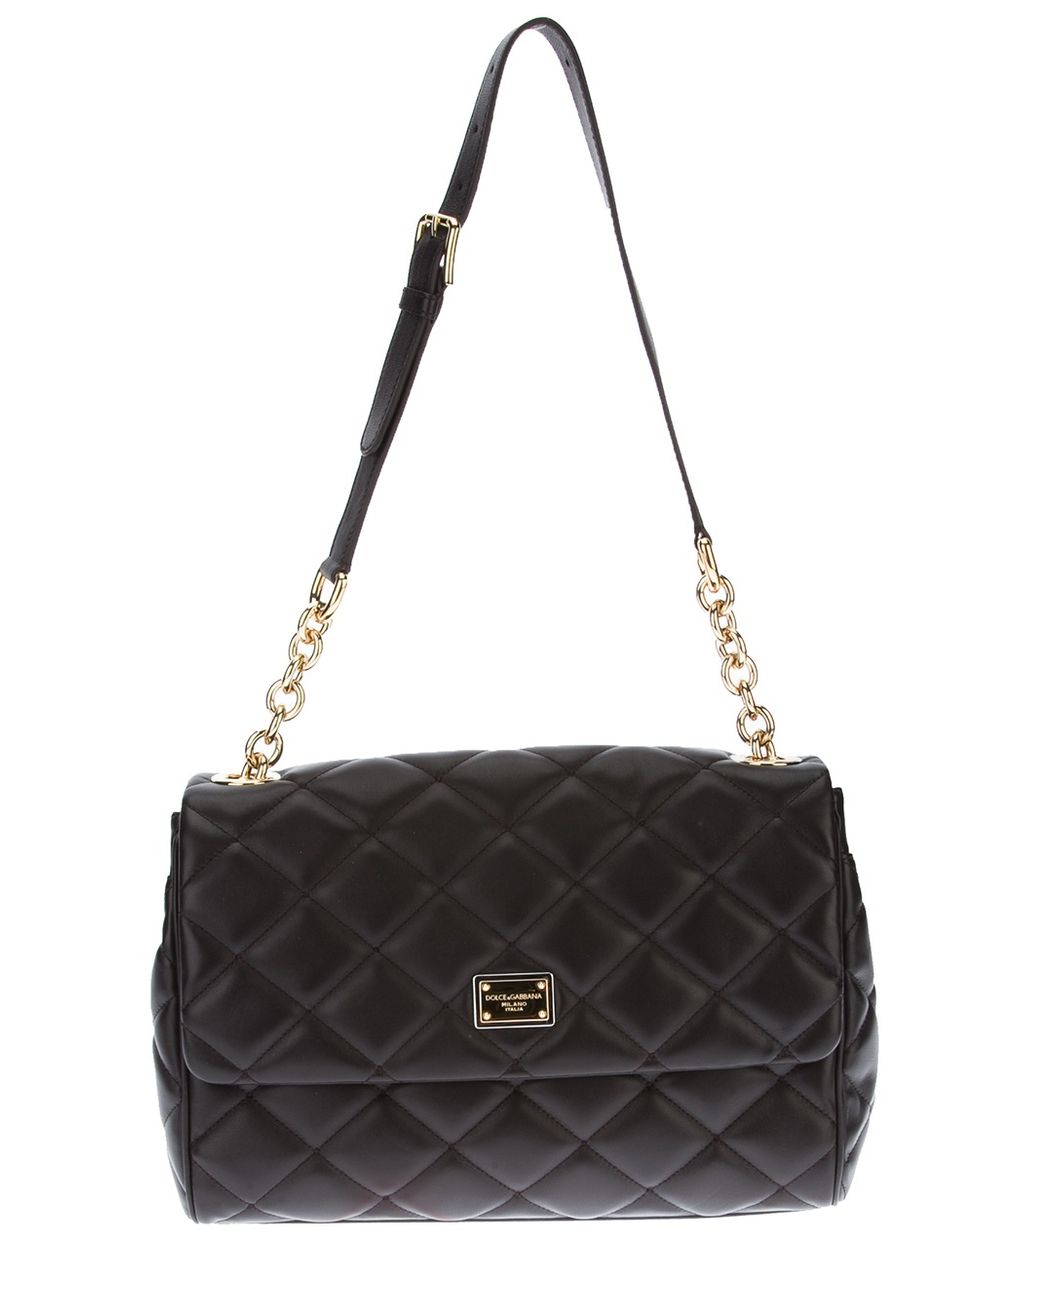 Dolce & Gabbana Quilted Leather Shoulder Bag in Brown (Black) | Lyst